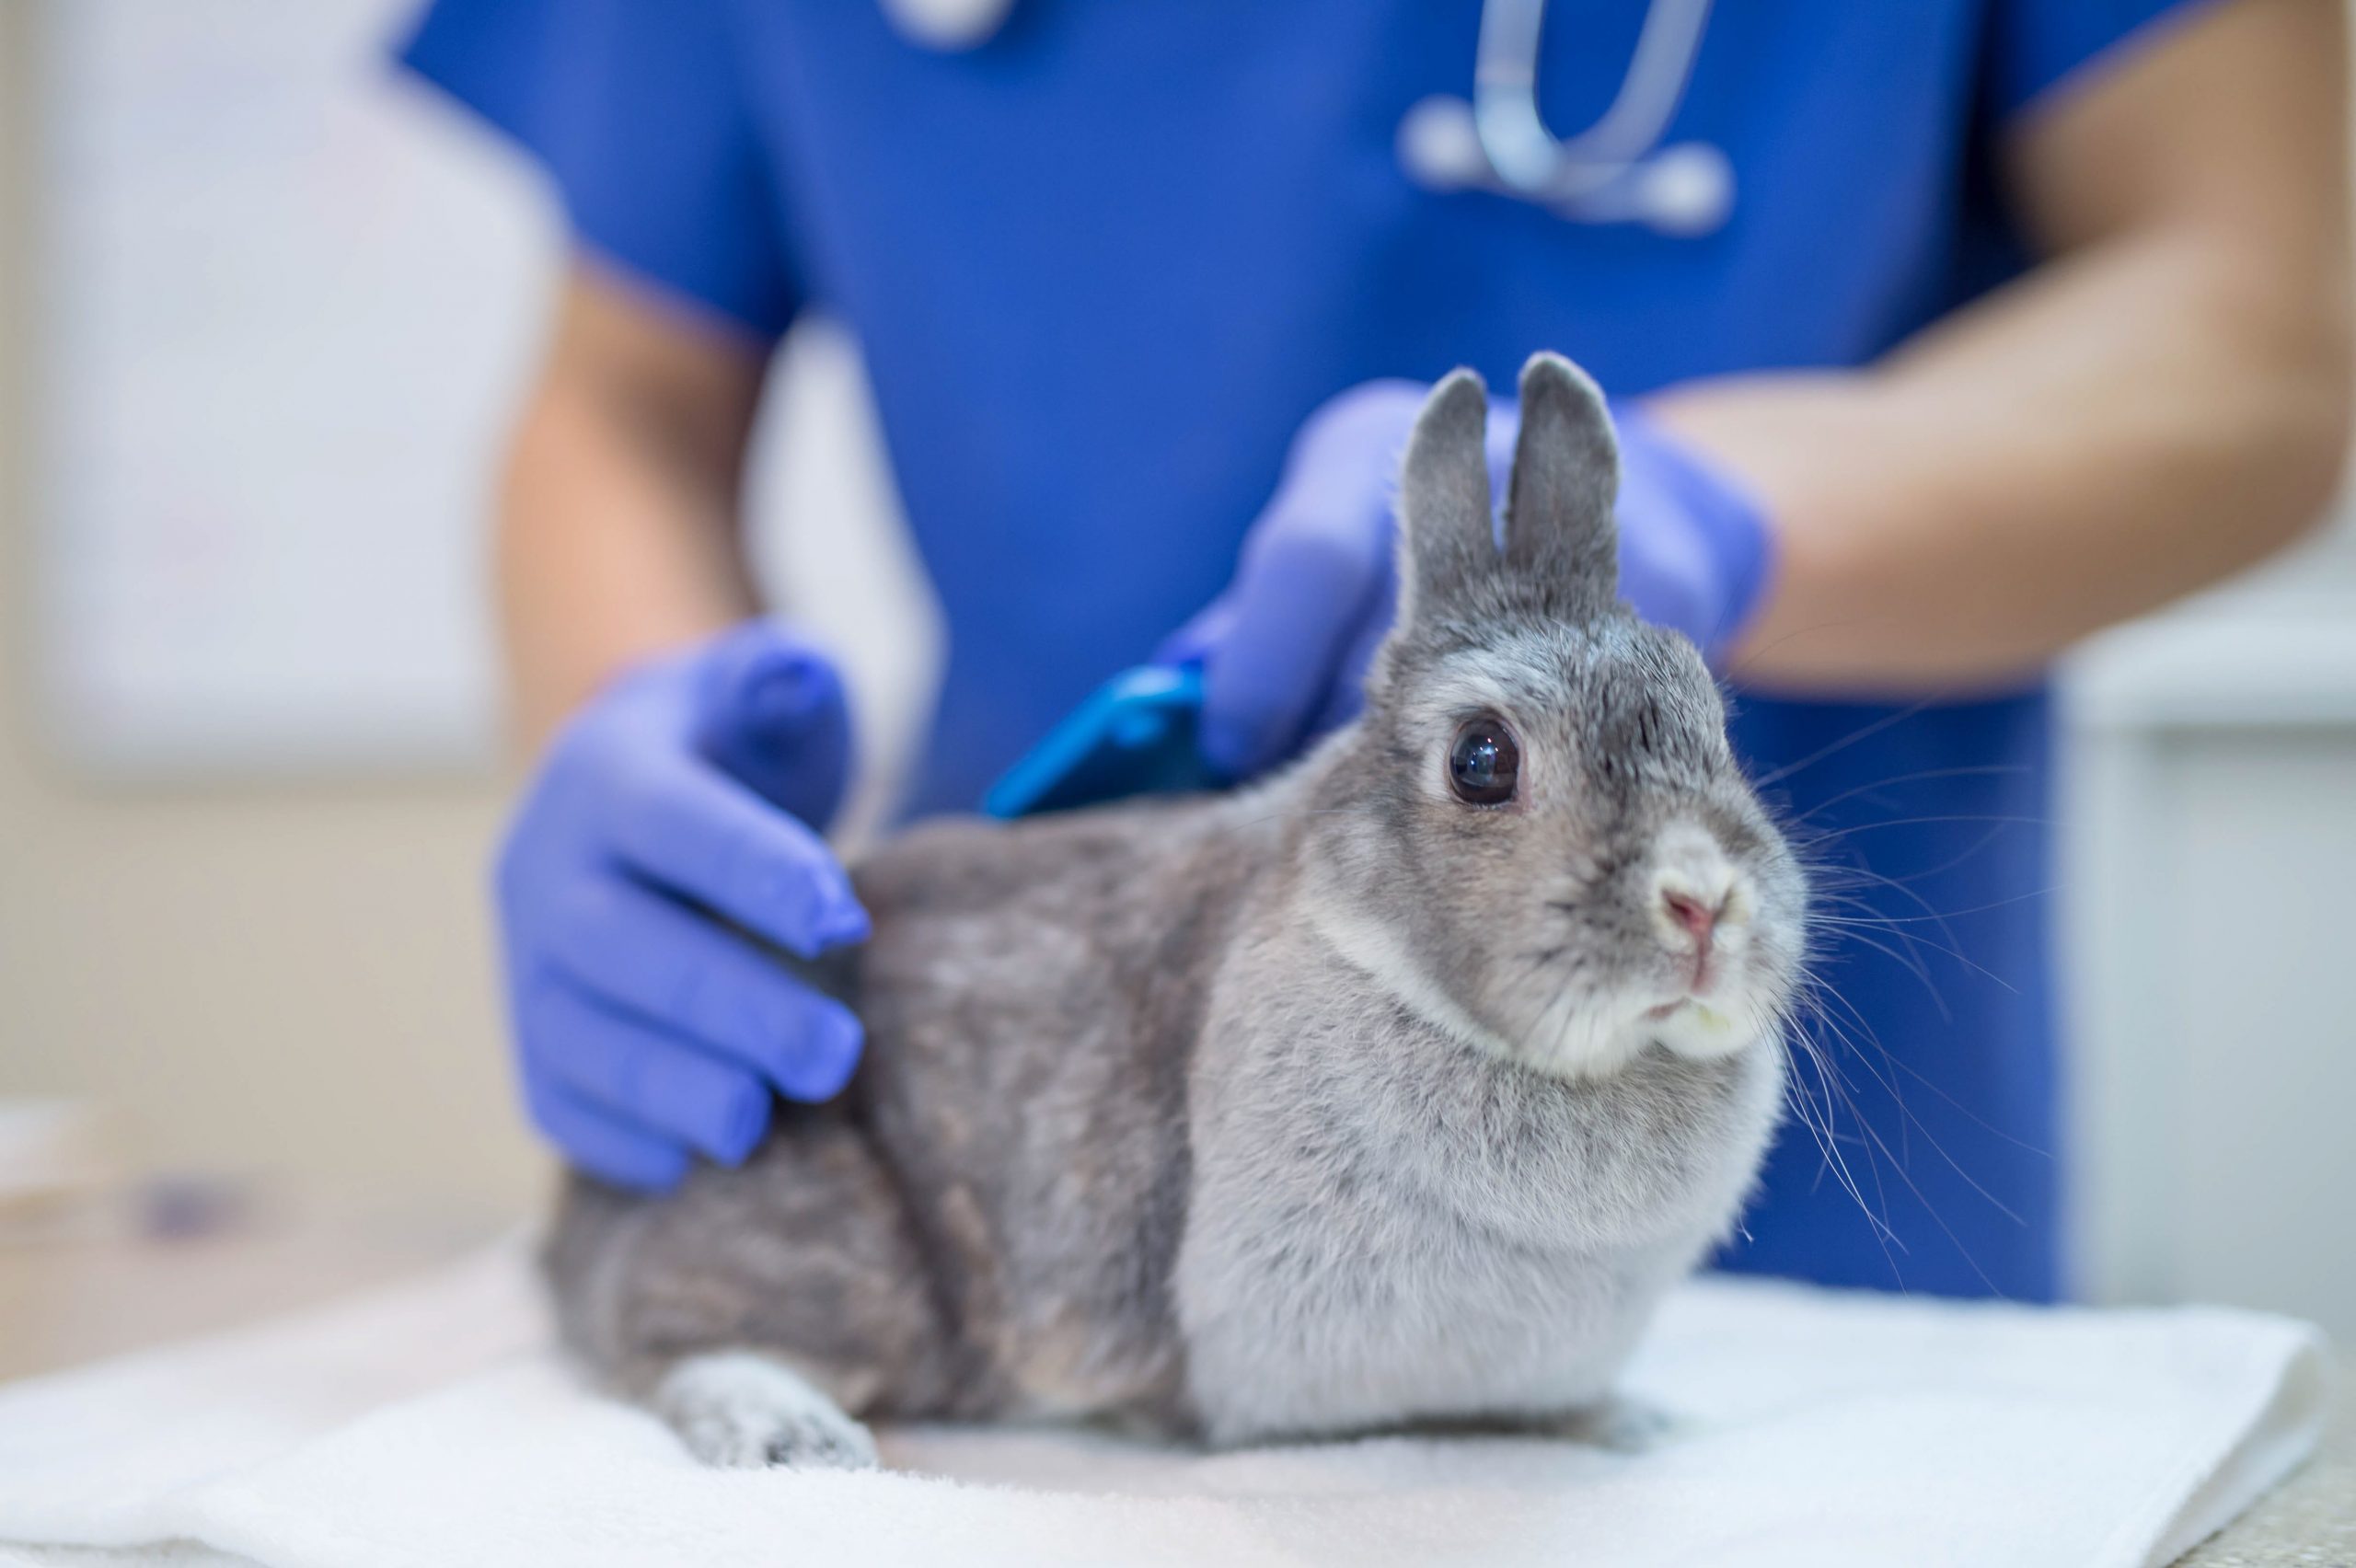 A rabbit at a vet clinic.